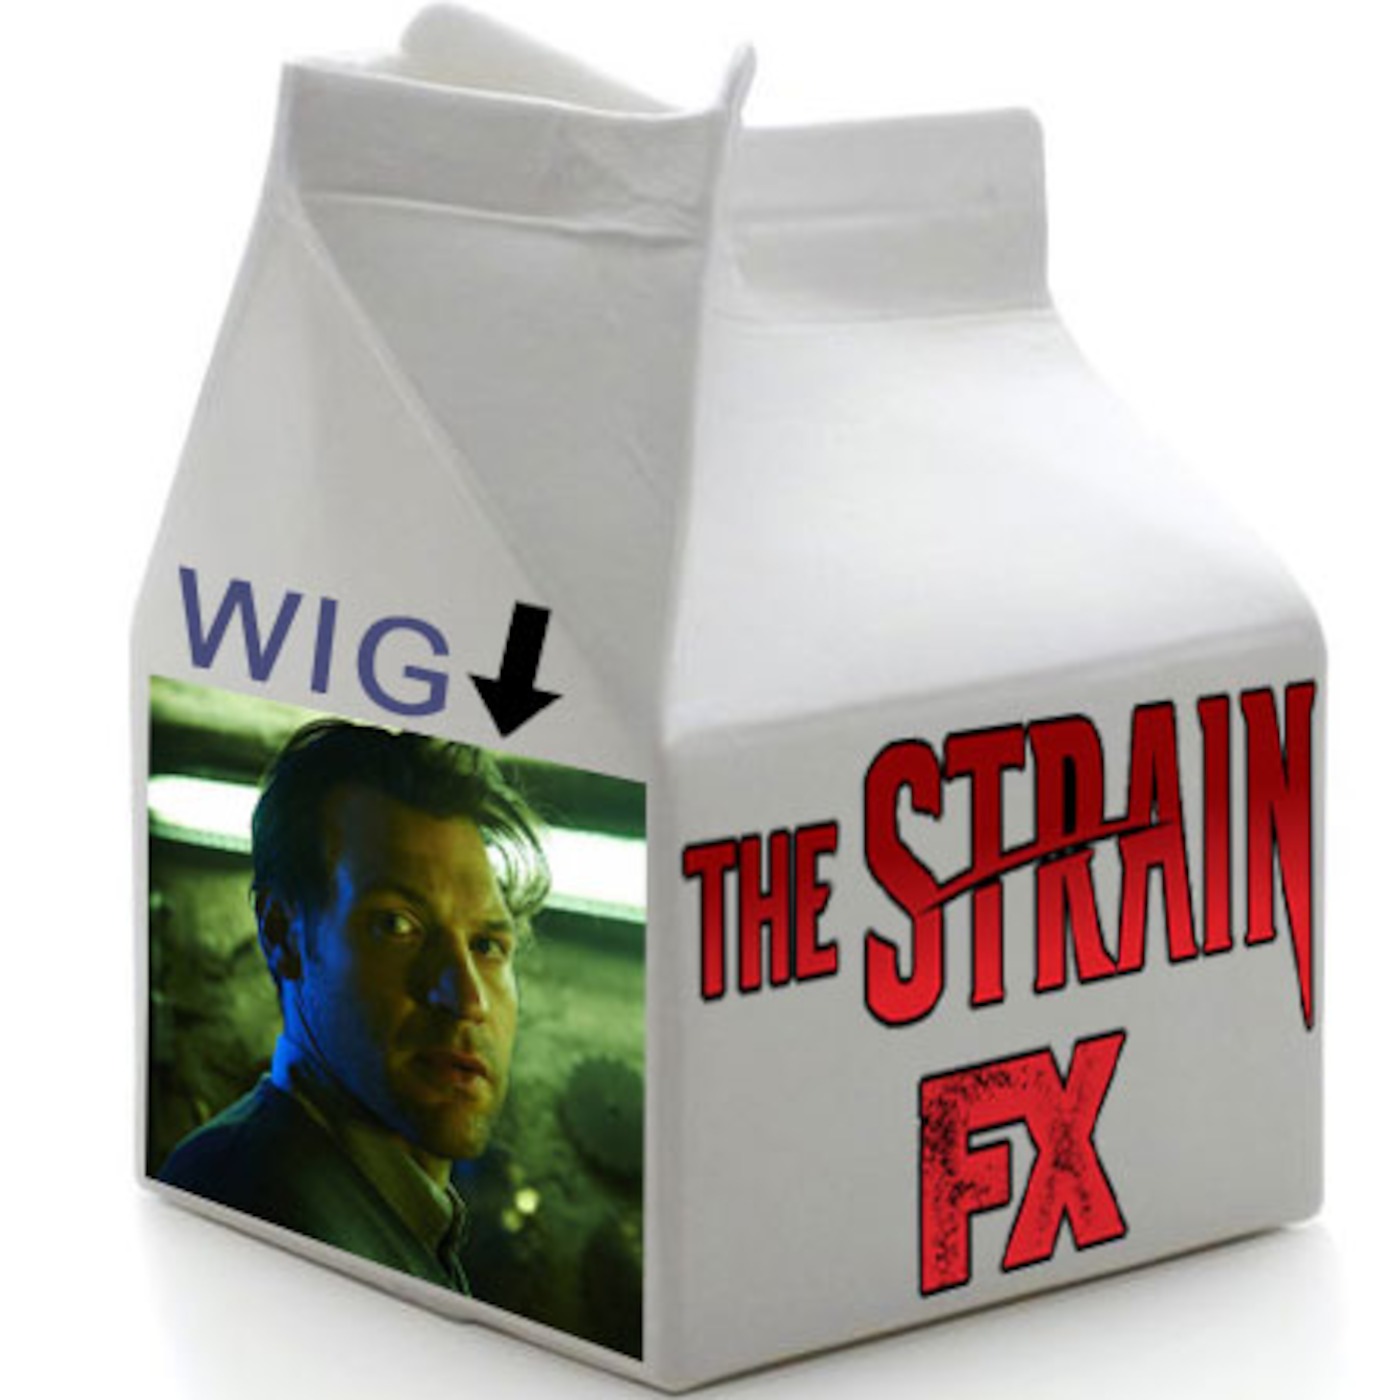 The Strain: Season 4, Episode 2: “The Blood Tax”